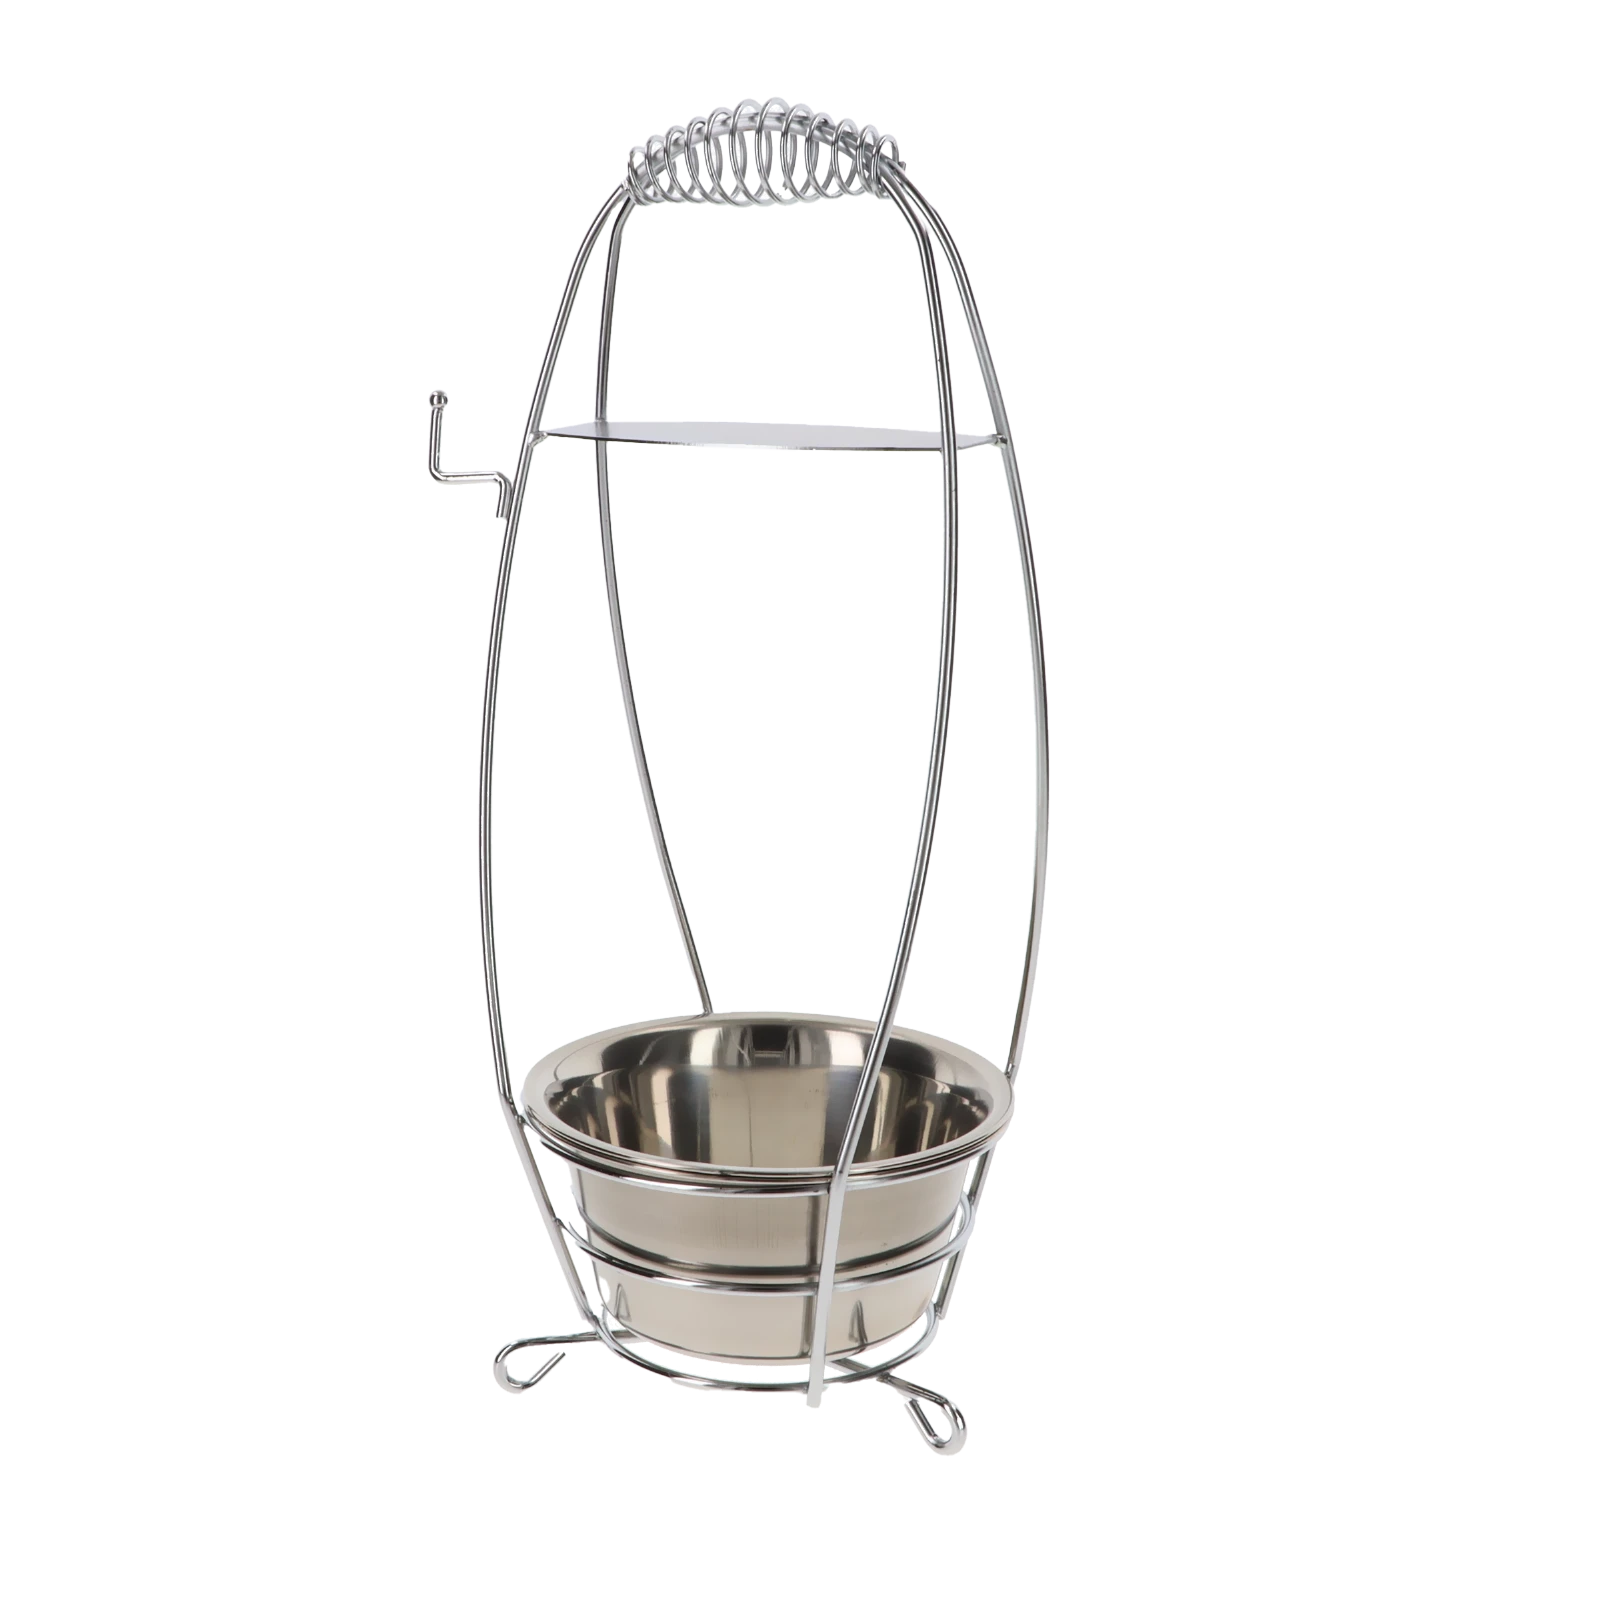 CharCoal Basket - Small